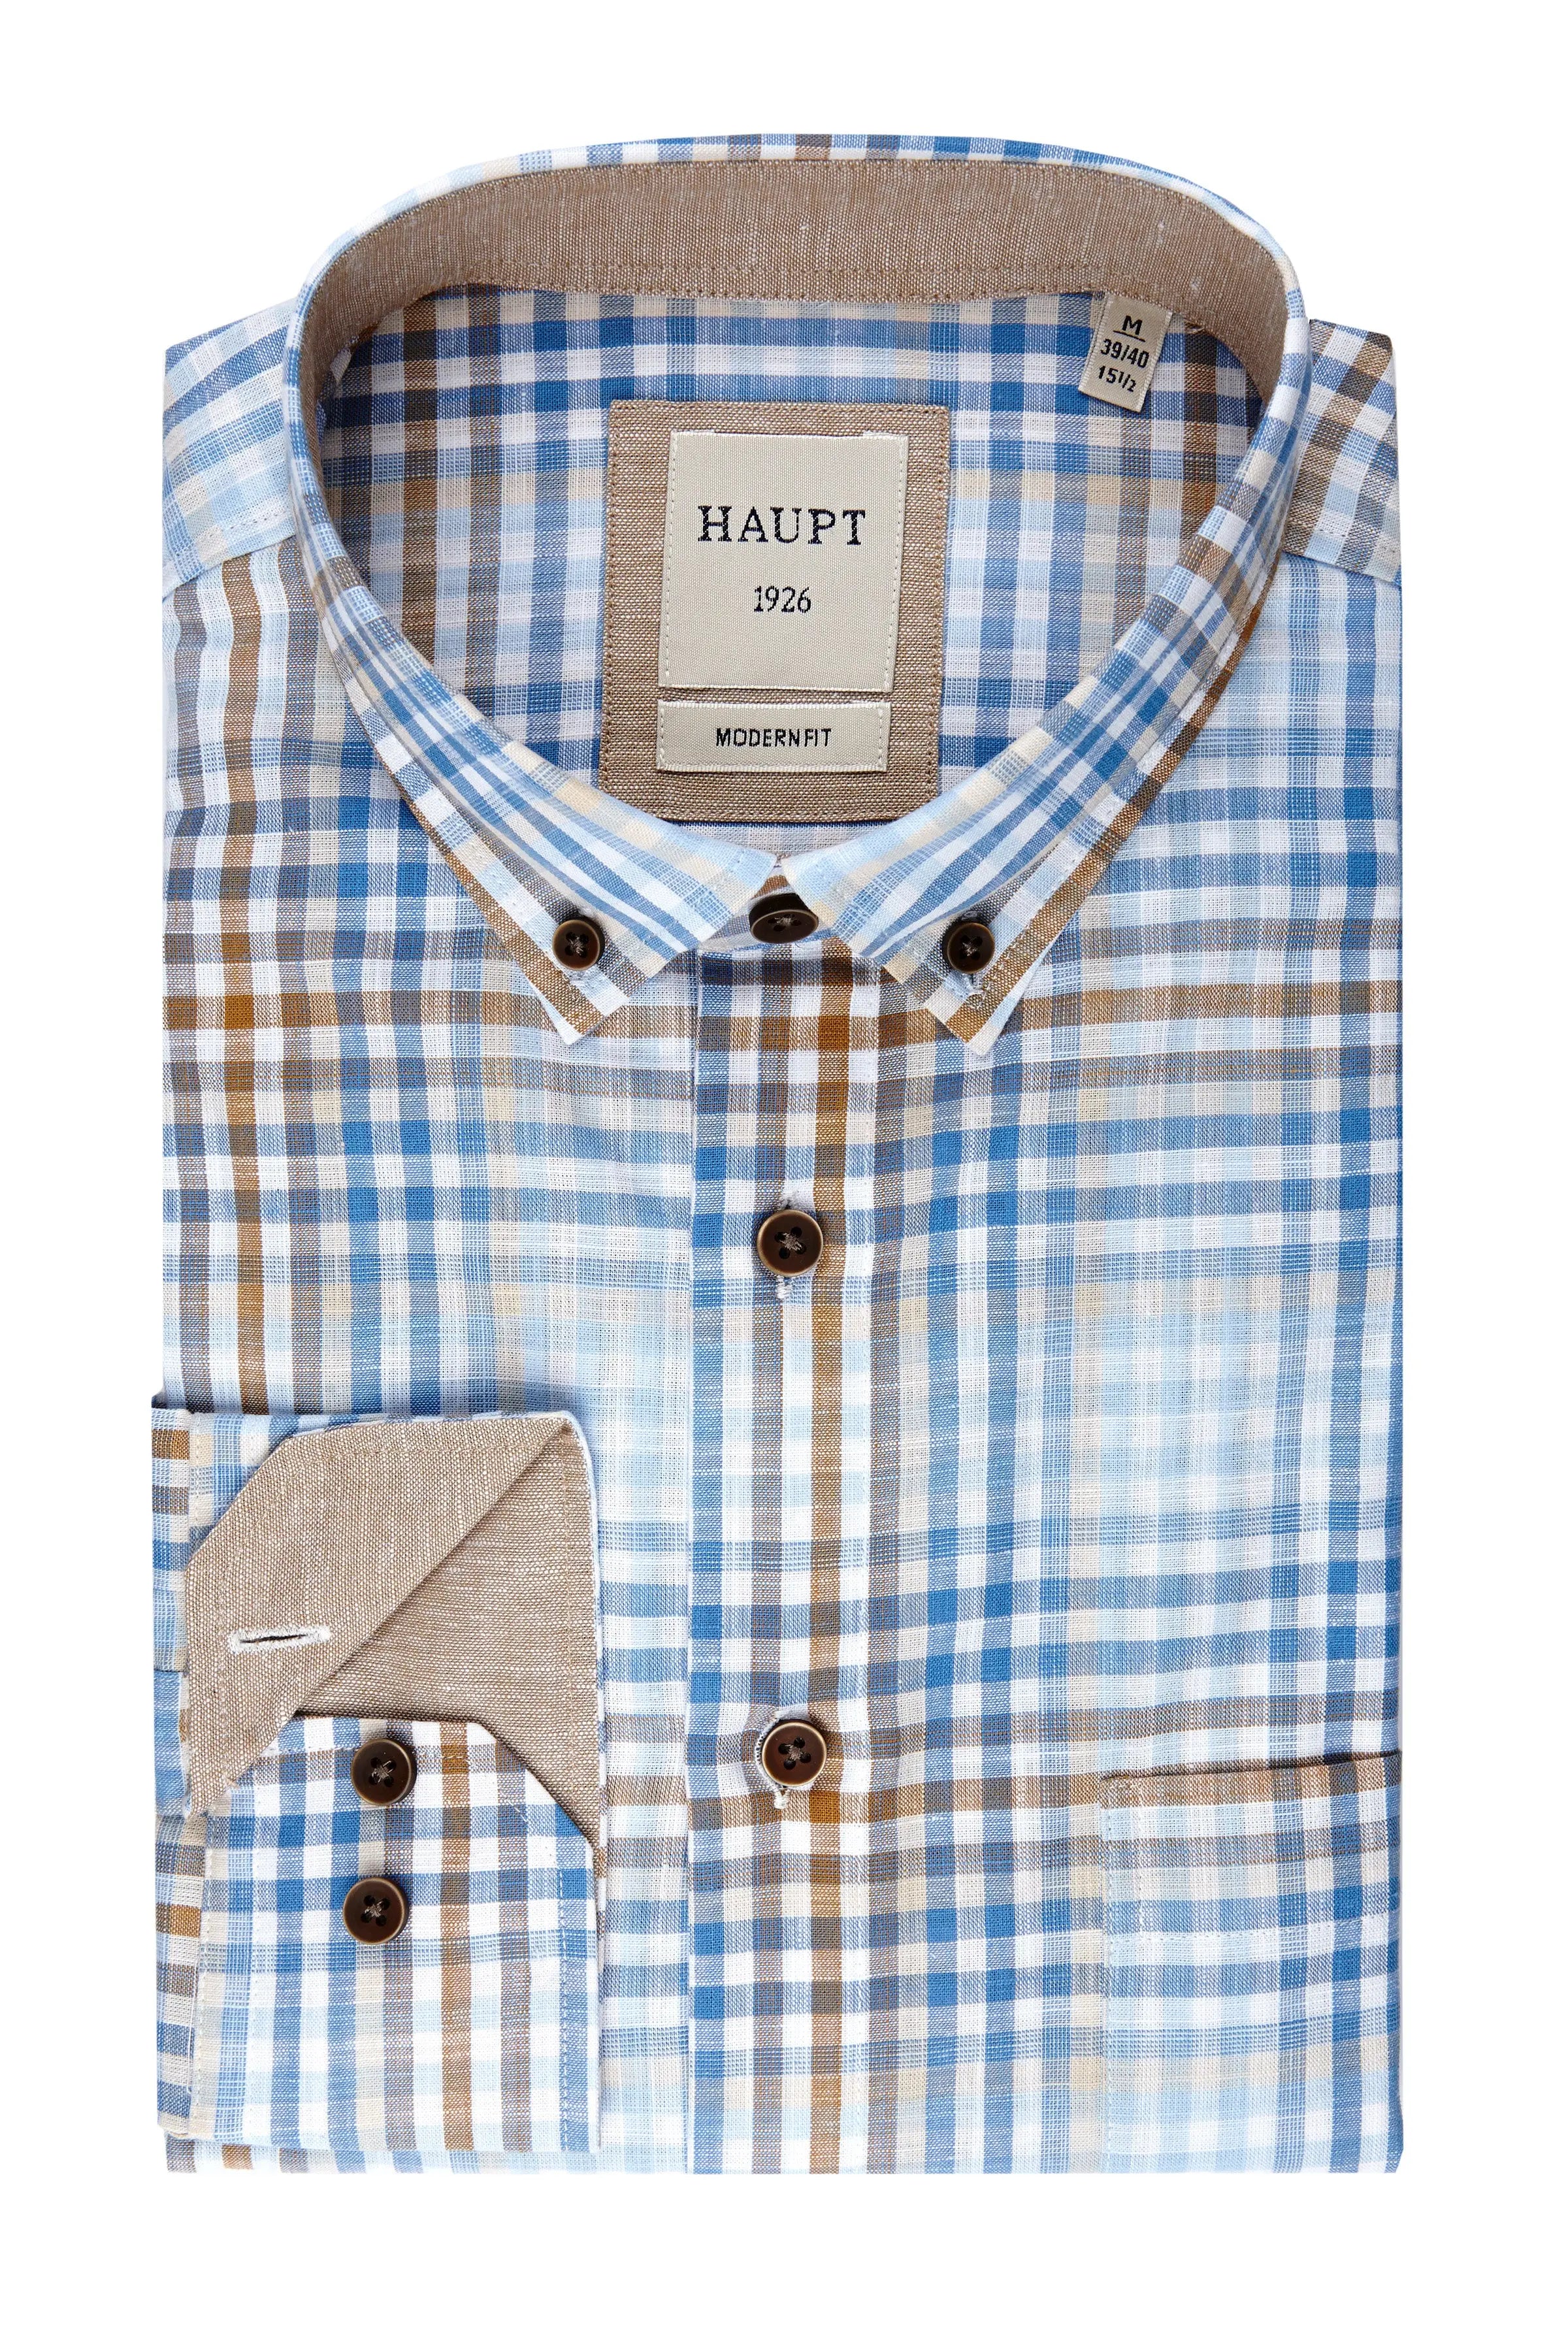 Baumwoll-Herrenhemd light blue check Haupt